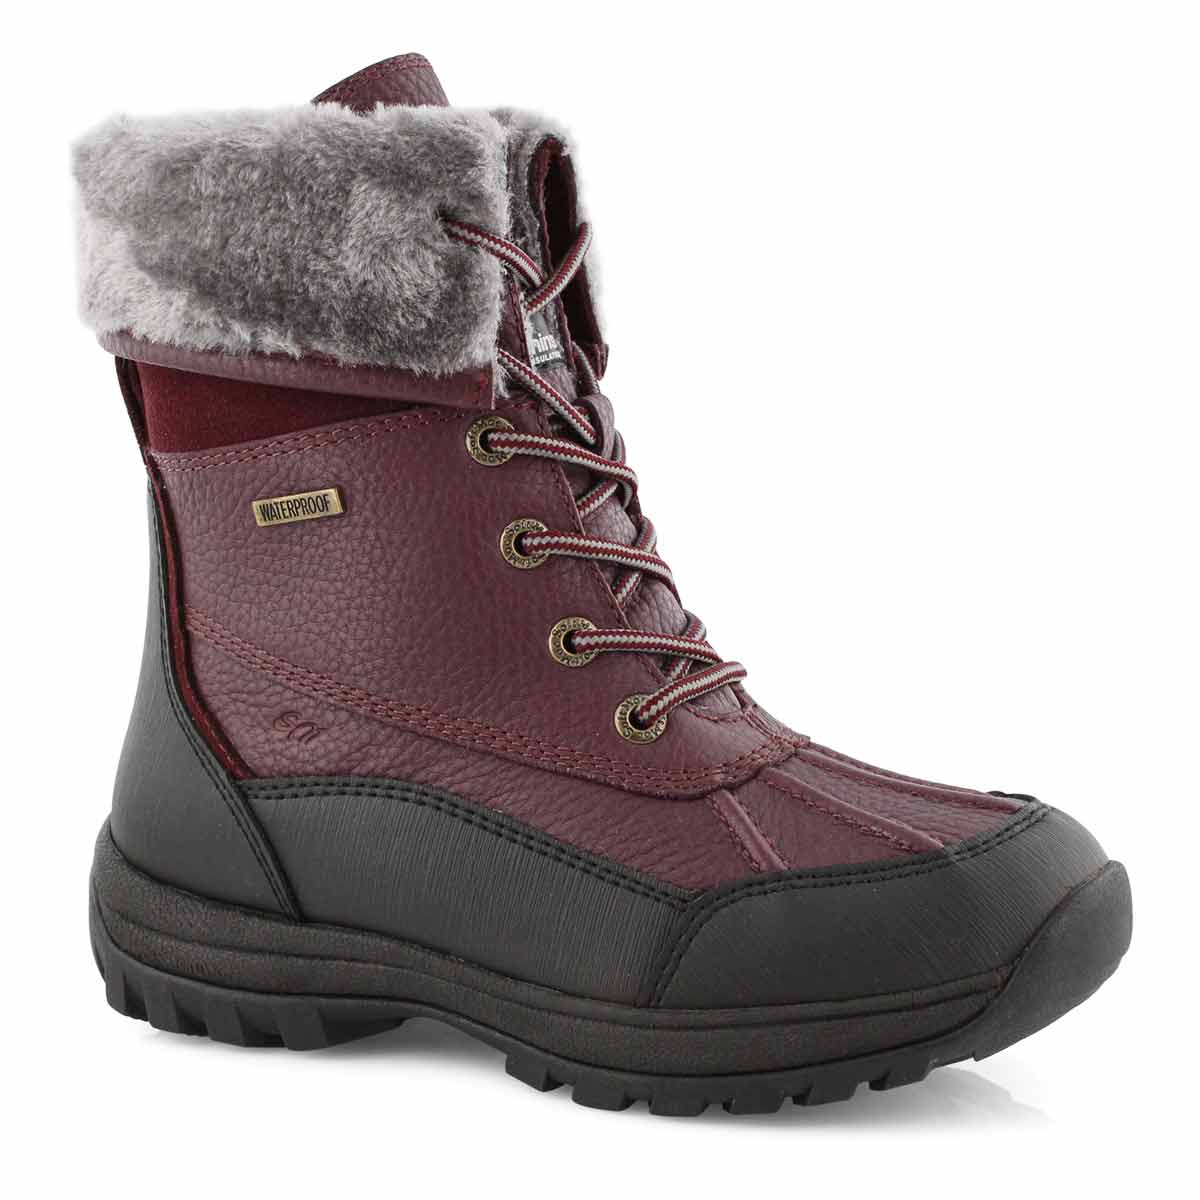 softmoc snow boots